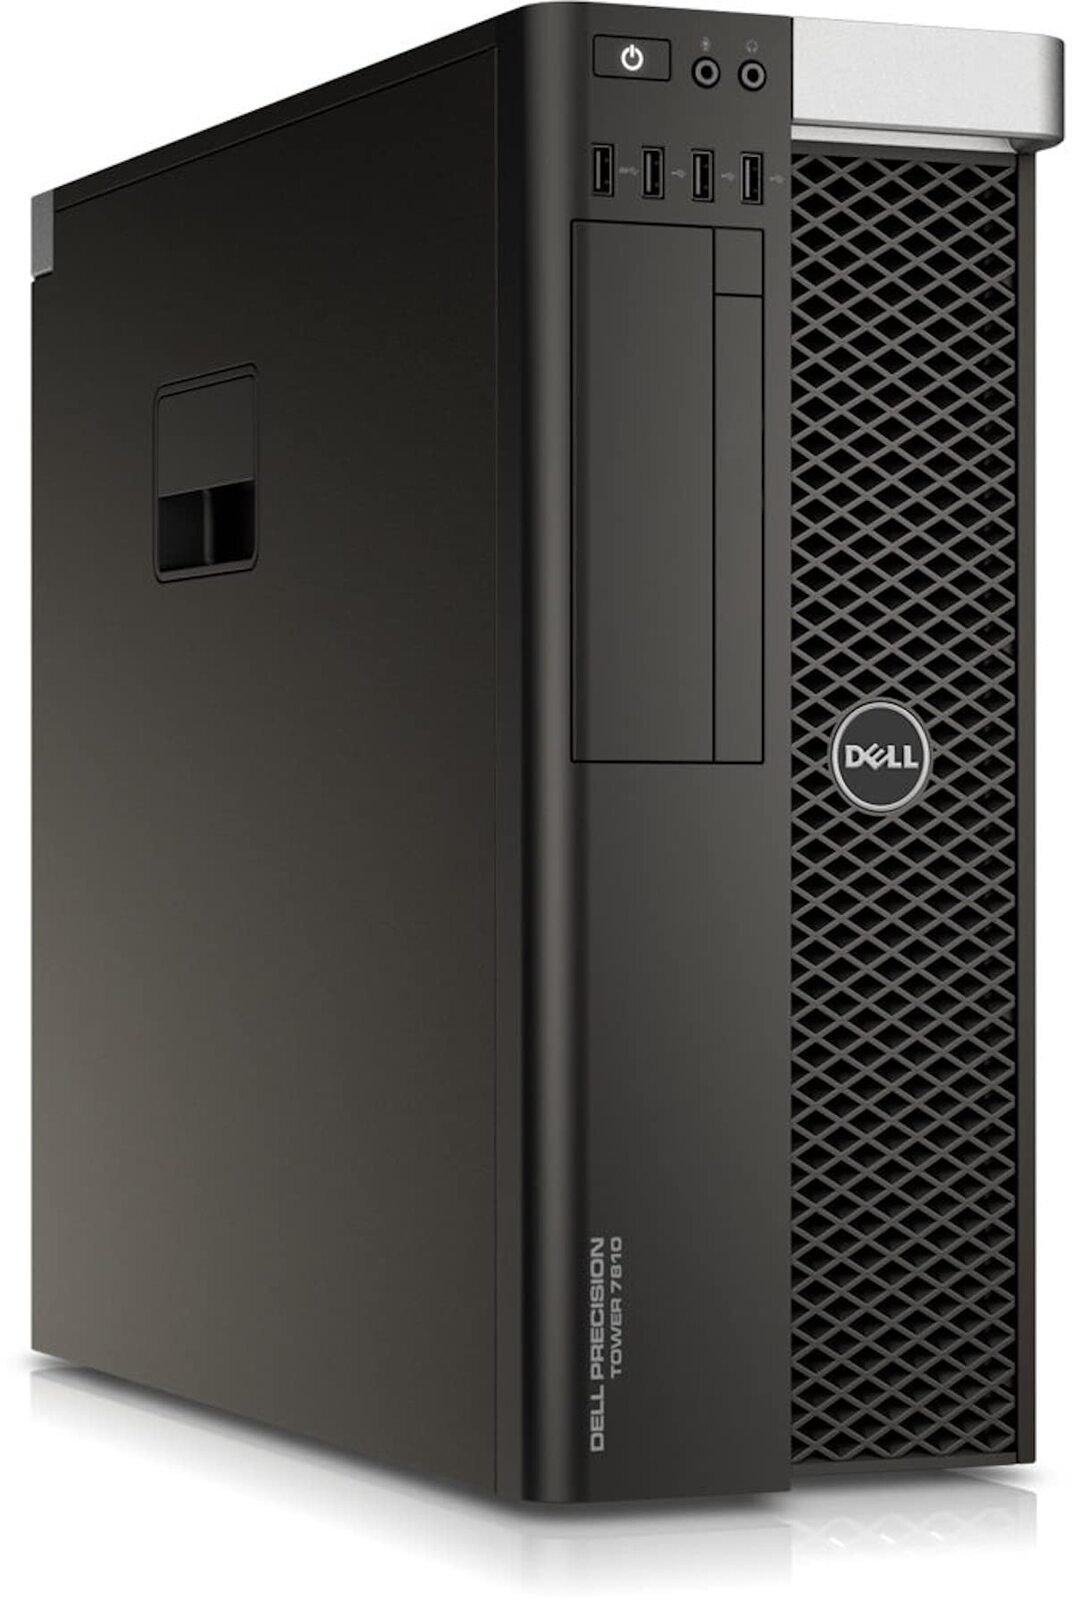 Dell Precision Tower 7810 Intel Xeon E5-2630 V4 2.20GHz 8GB RAM 1TB HDD Win 10